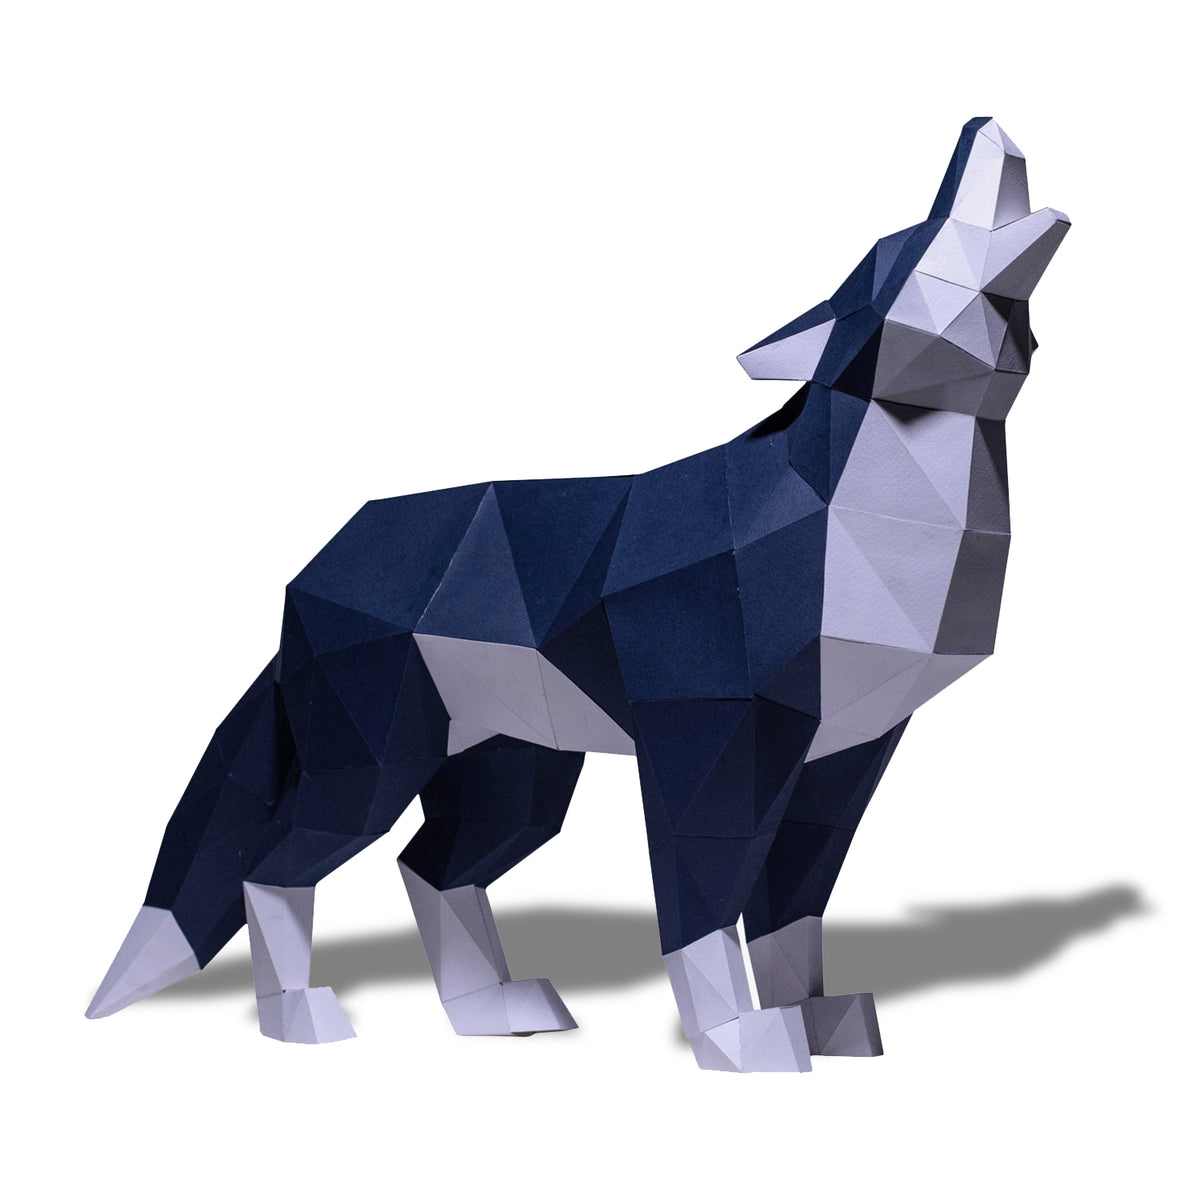 Official Wolf Conservation Center 3D PaperCraft Model – Stands